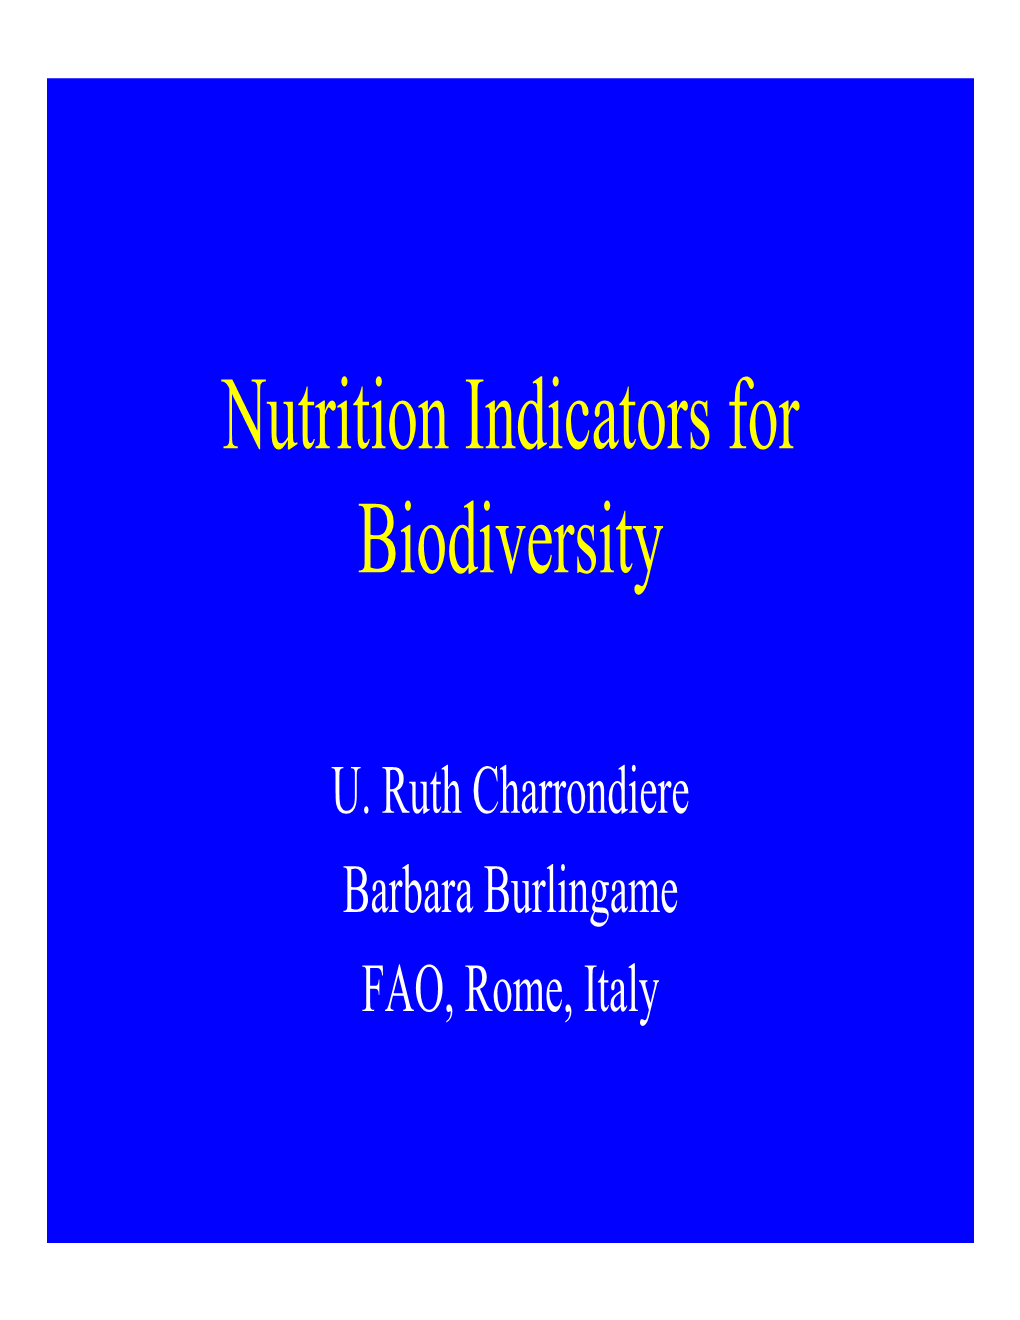 Nutrition Indicators for Biodiversity